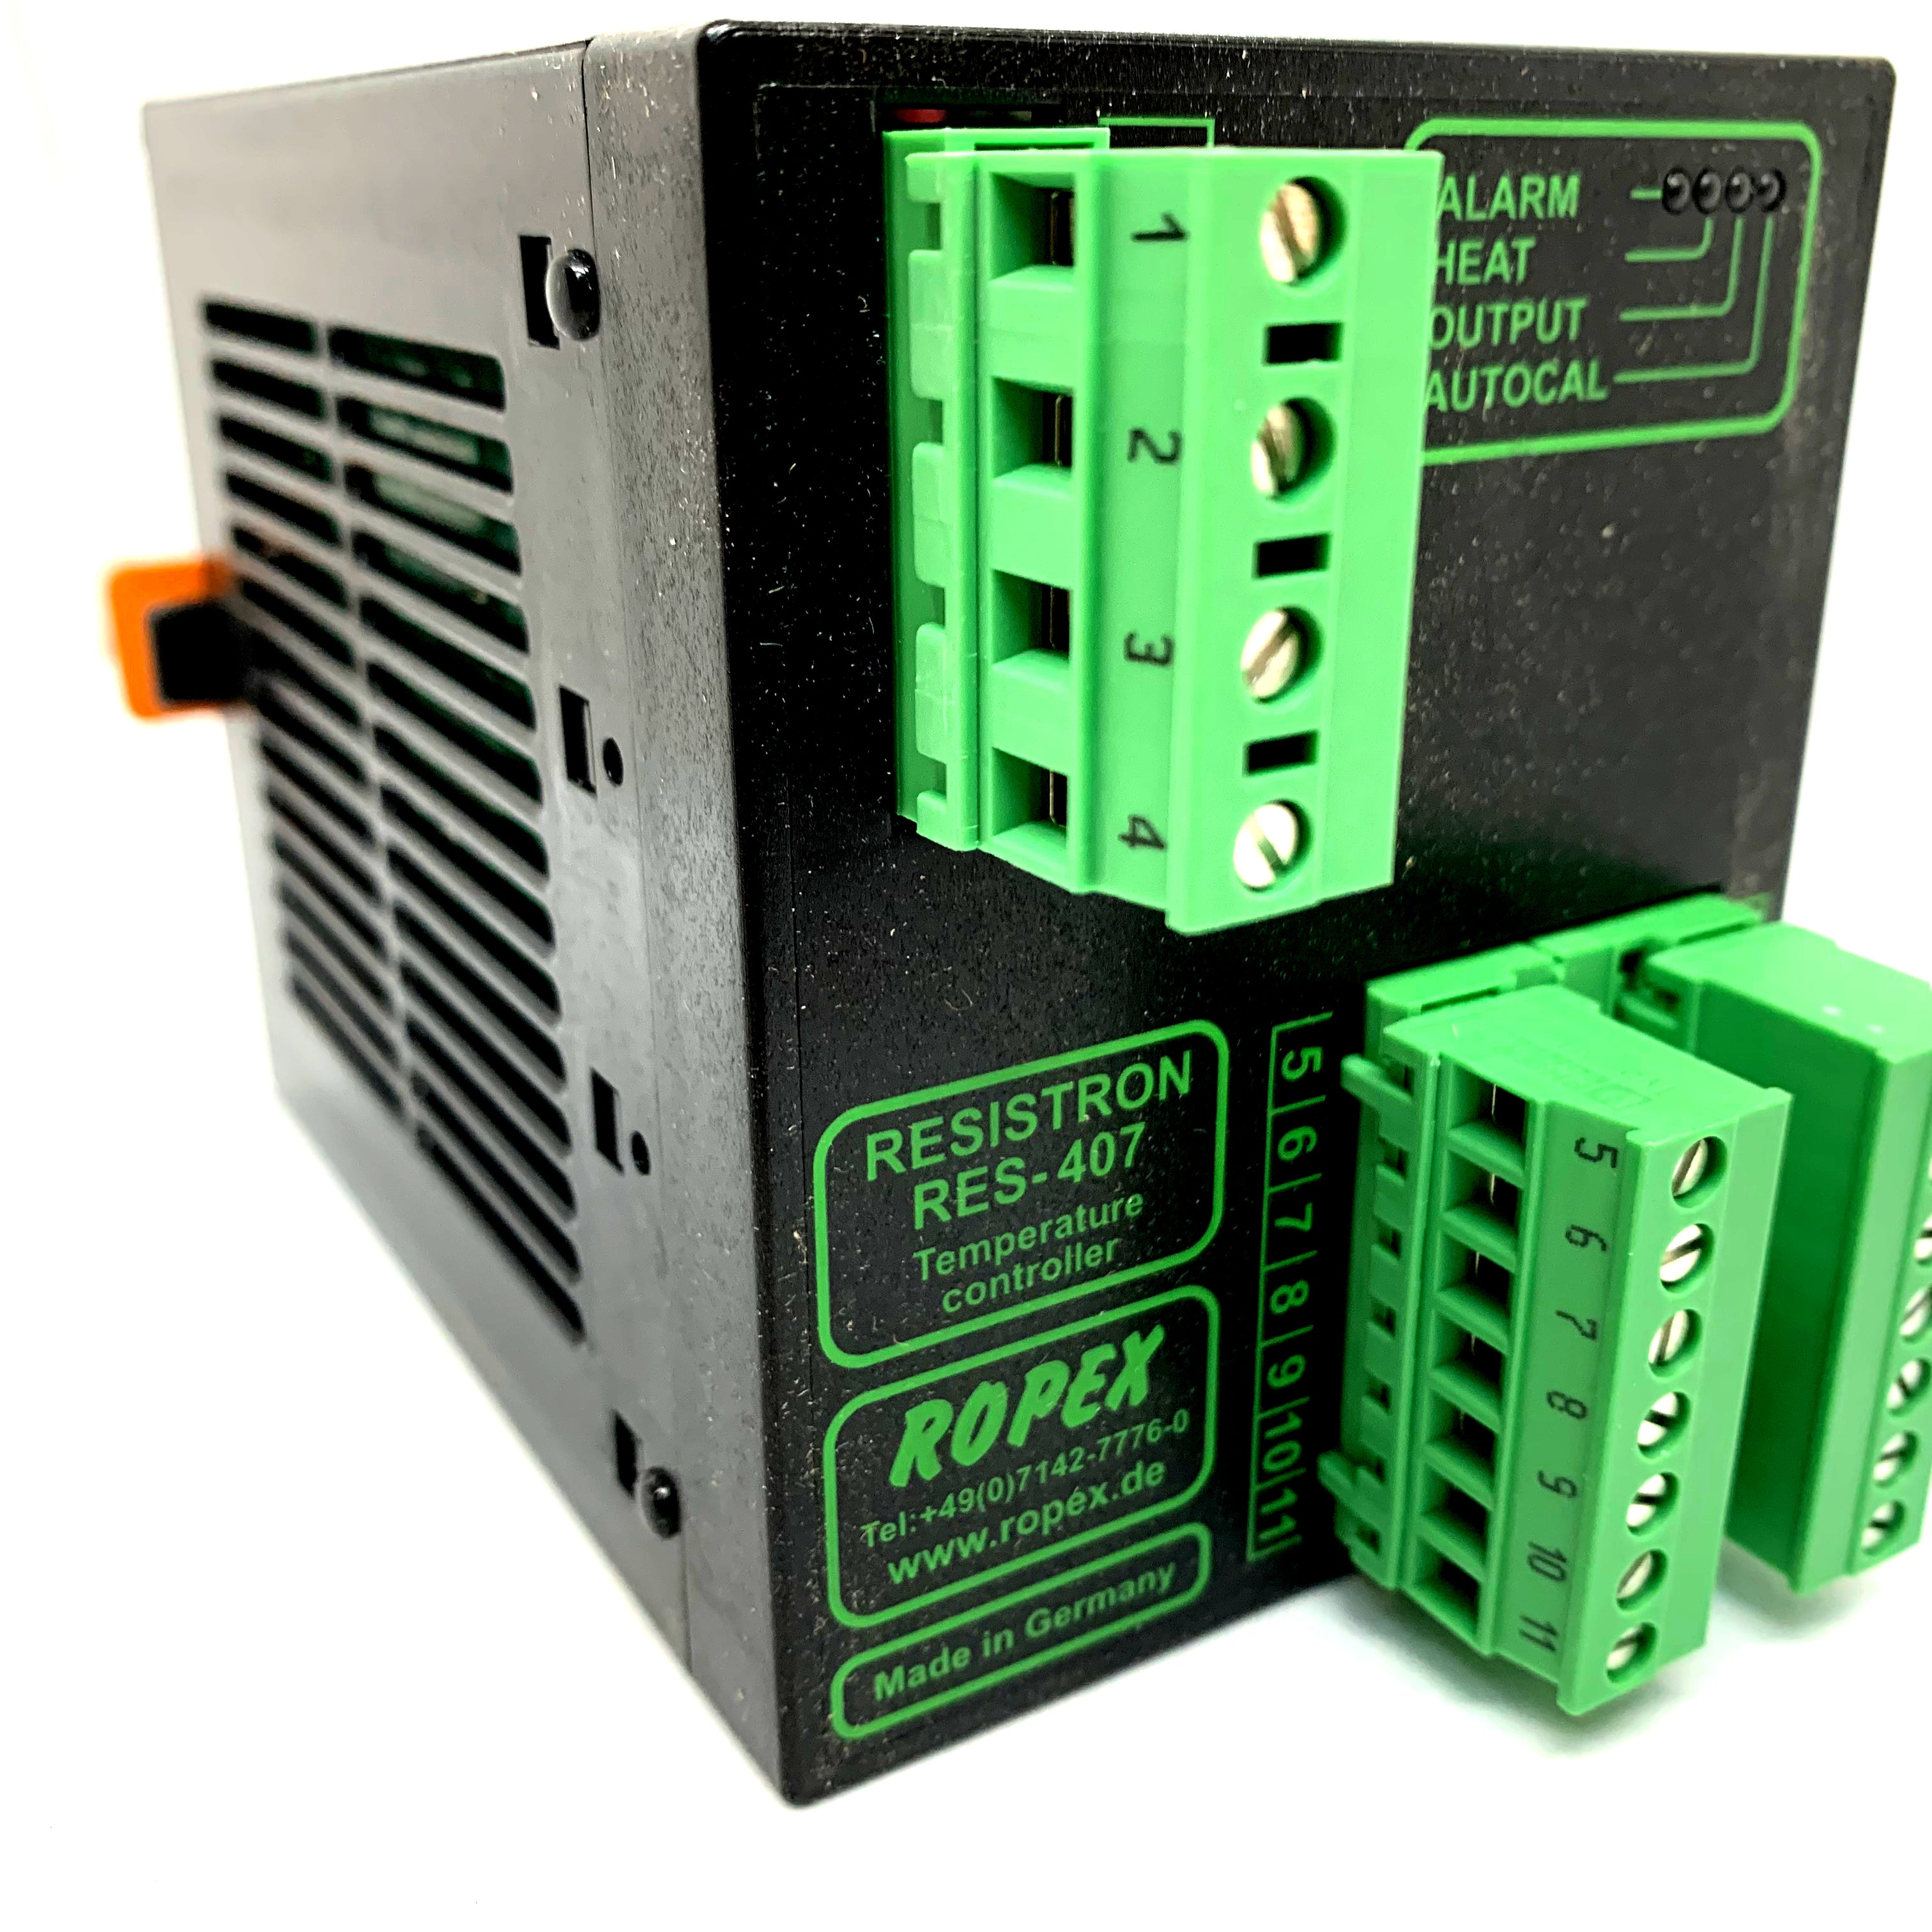 Ropex Heat Controller RES 407/230V